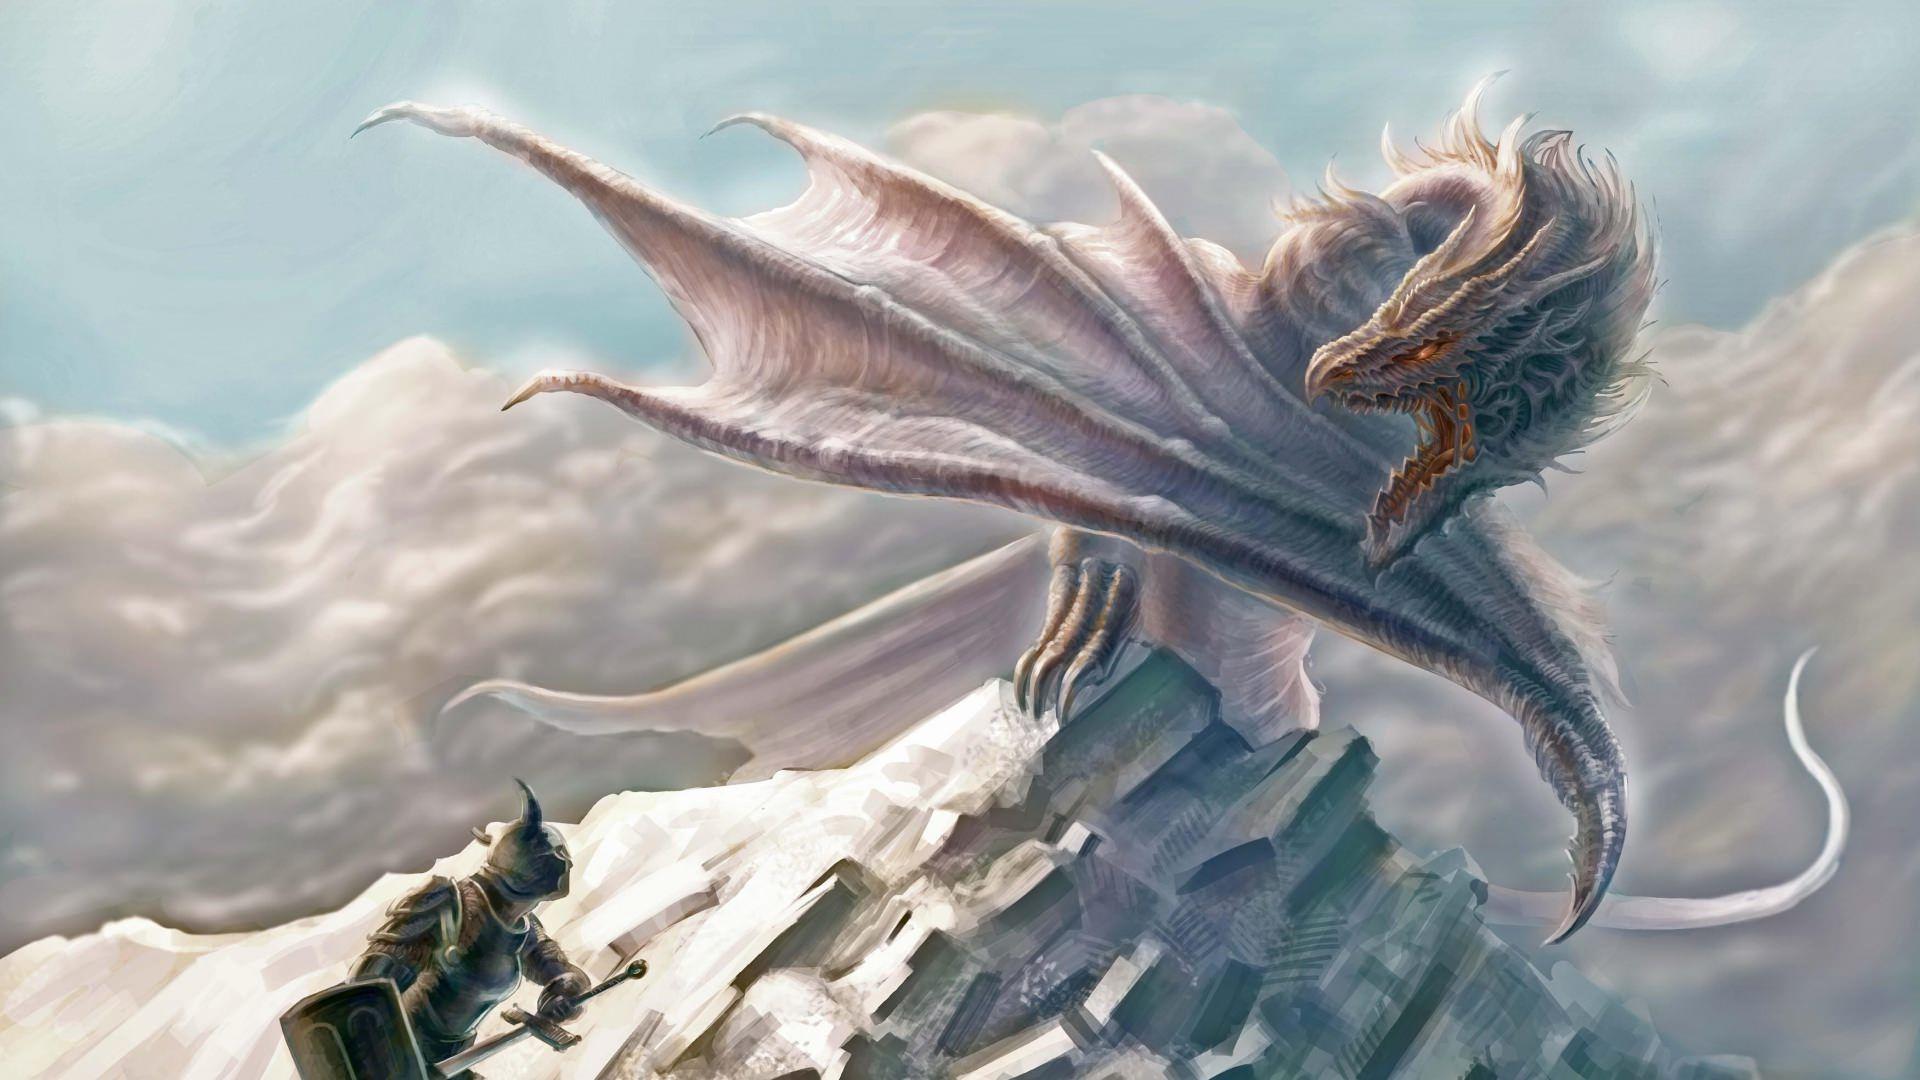 Dragon Wallpaper, Background, Image, Picture. Design